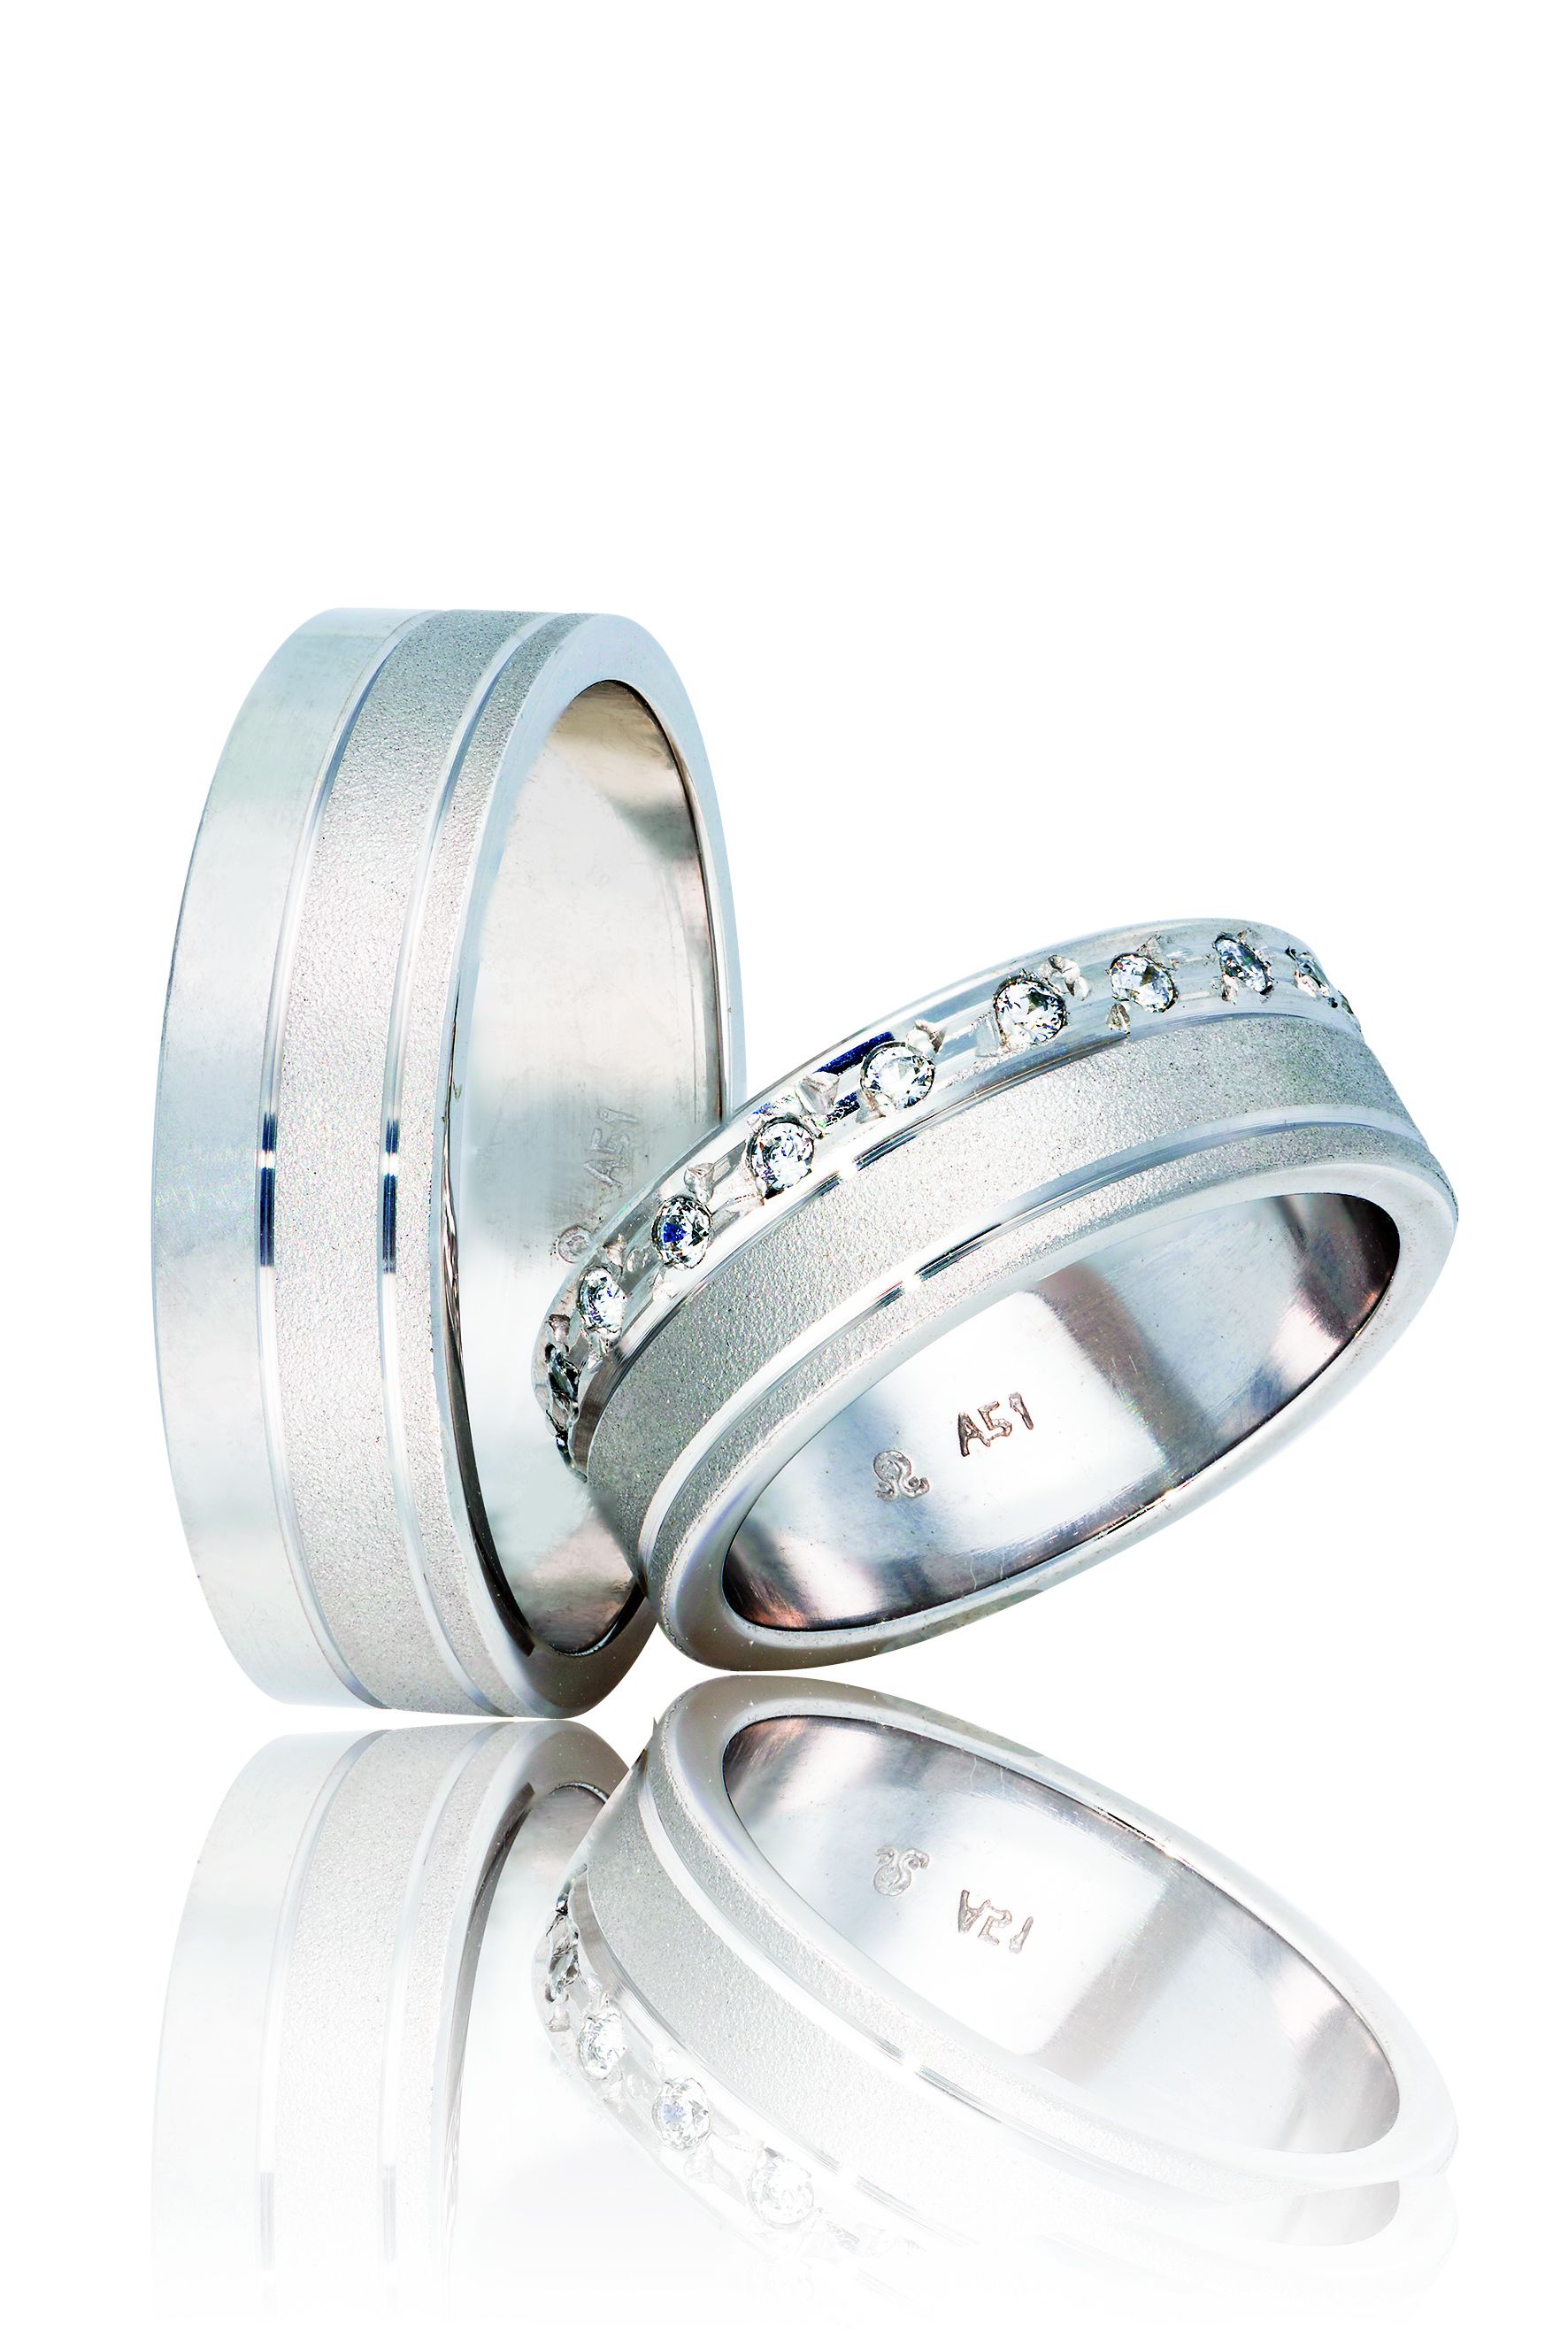 White gold wedding rings 6.5mm (code 1W)